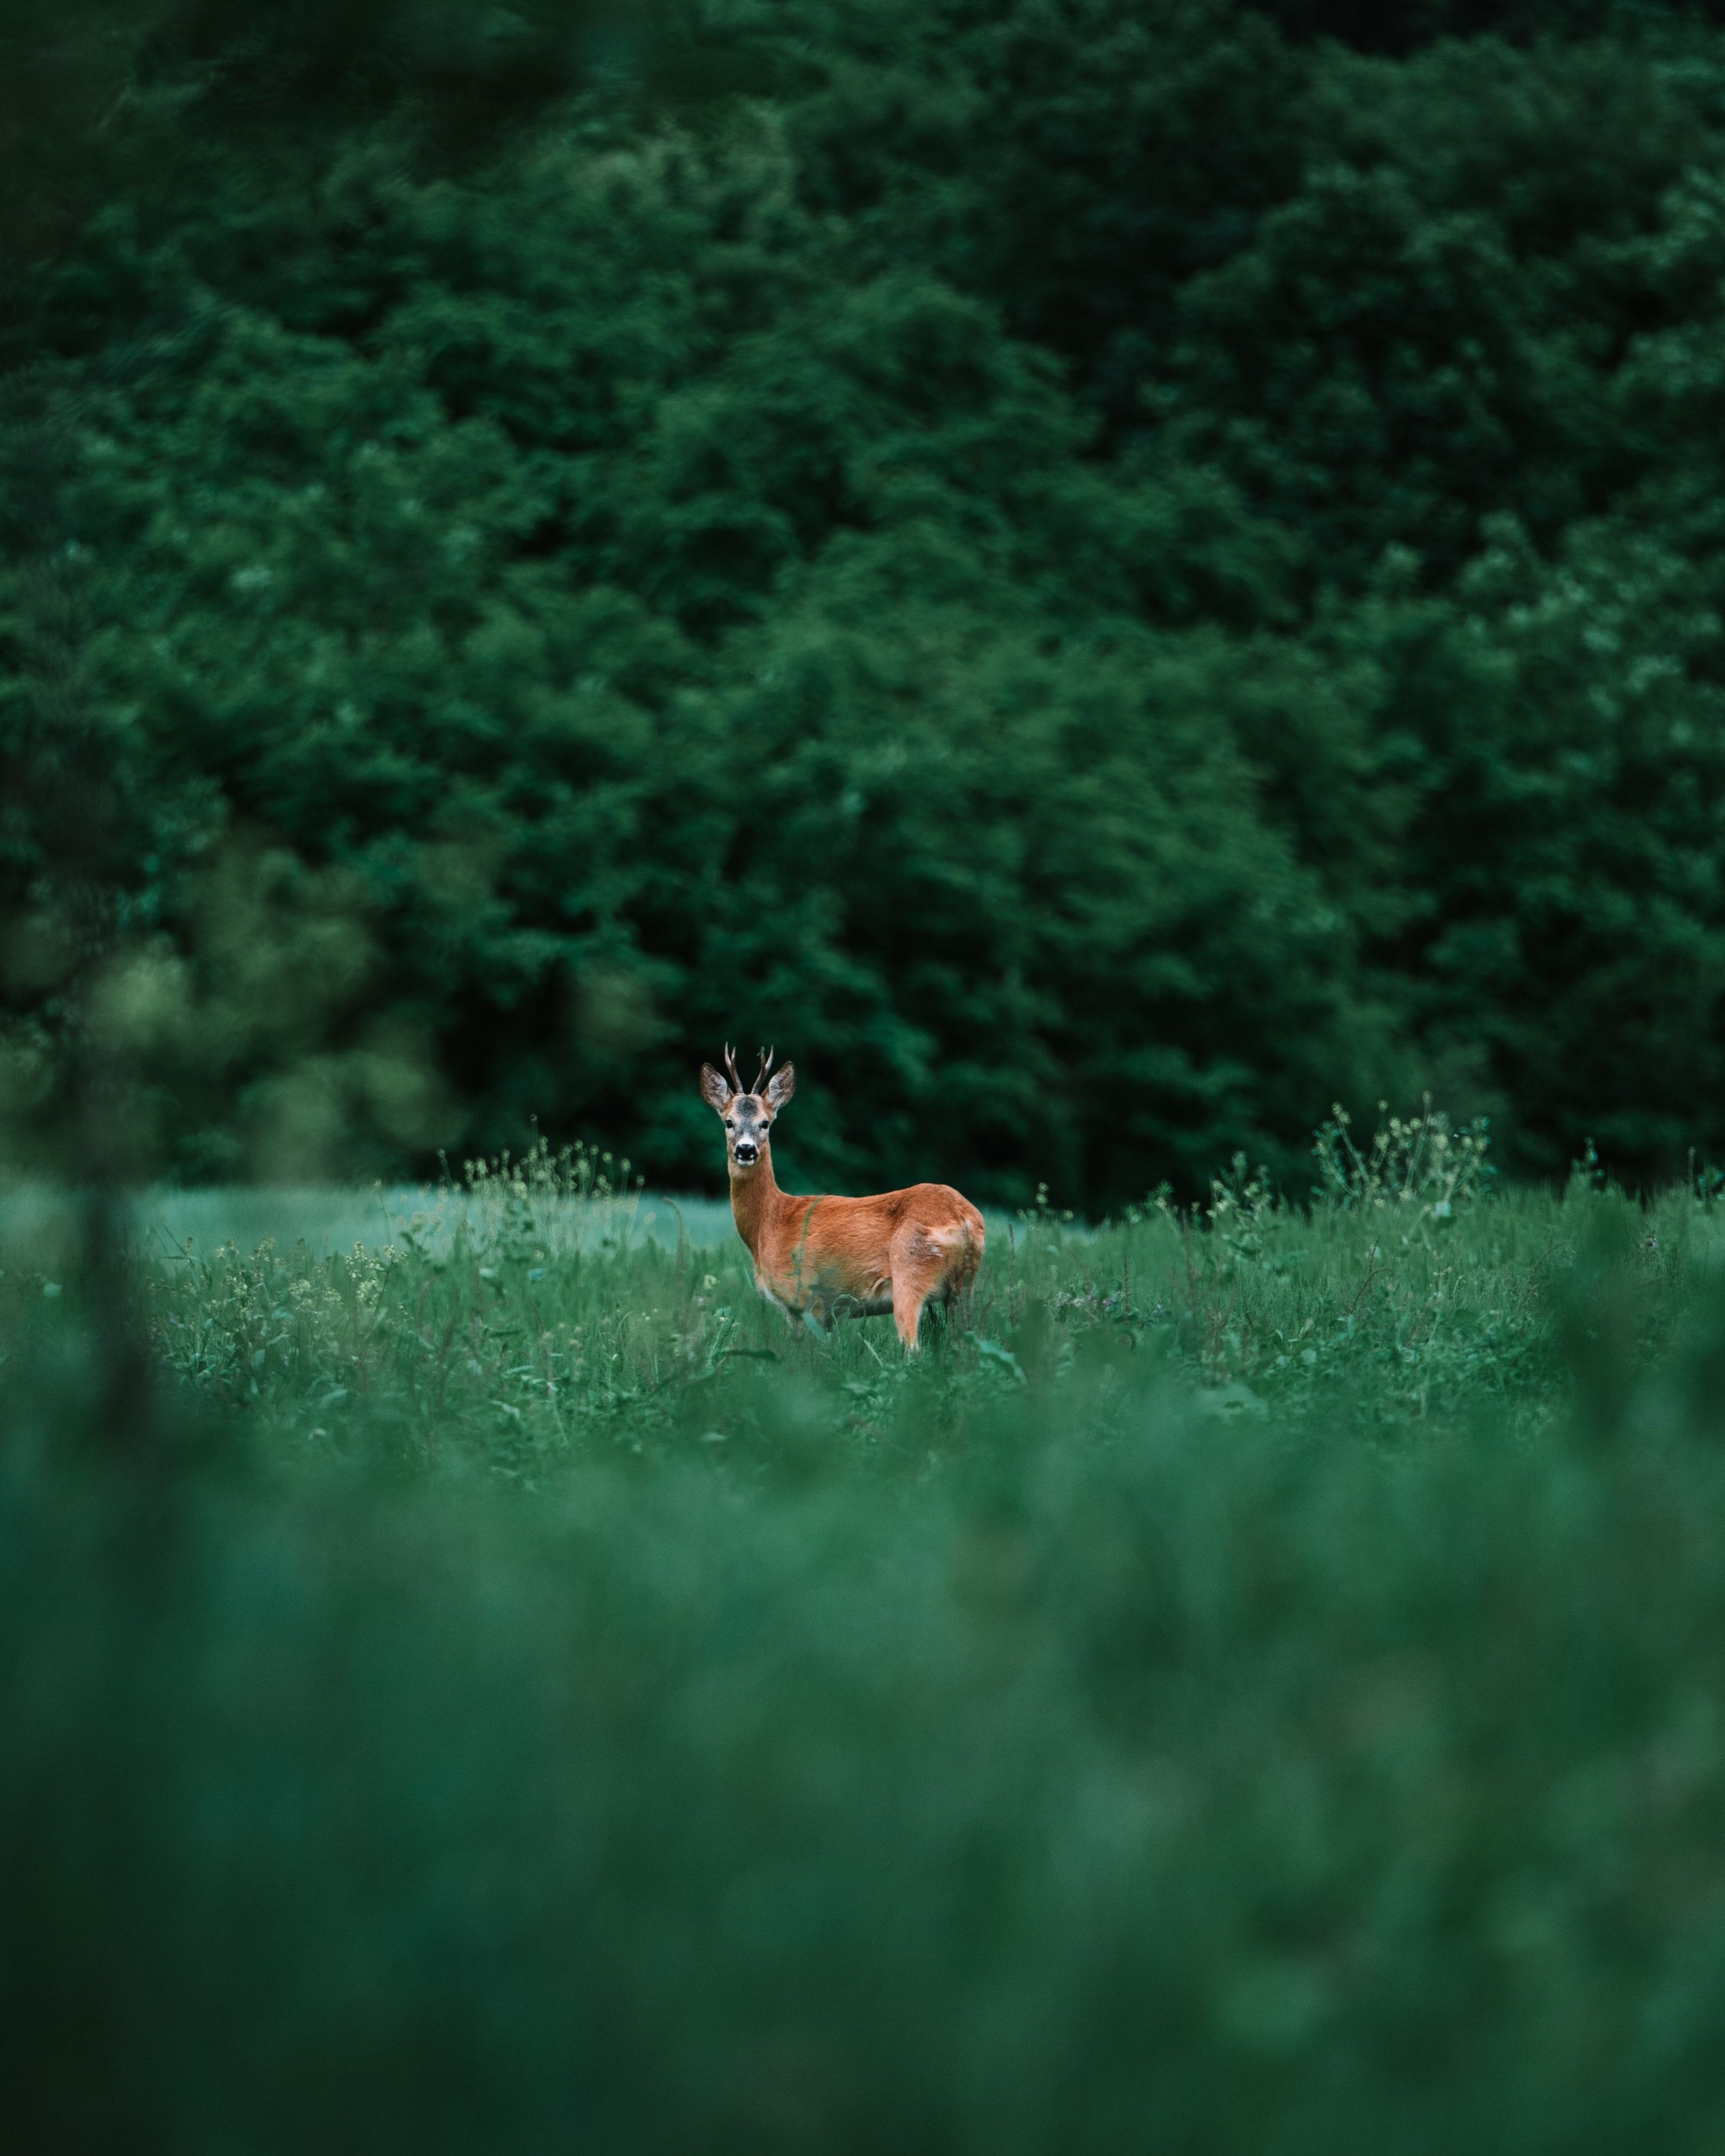 A deer standing in a grassy field - Deer